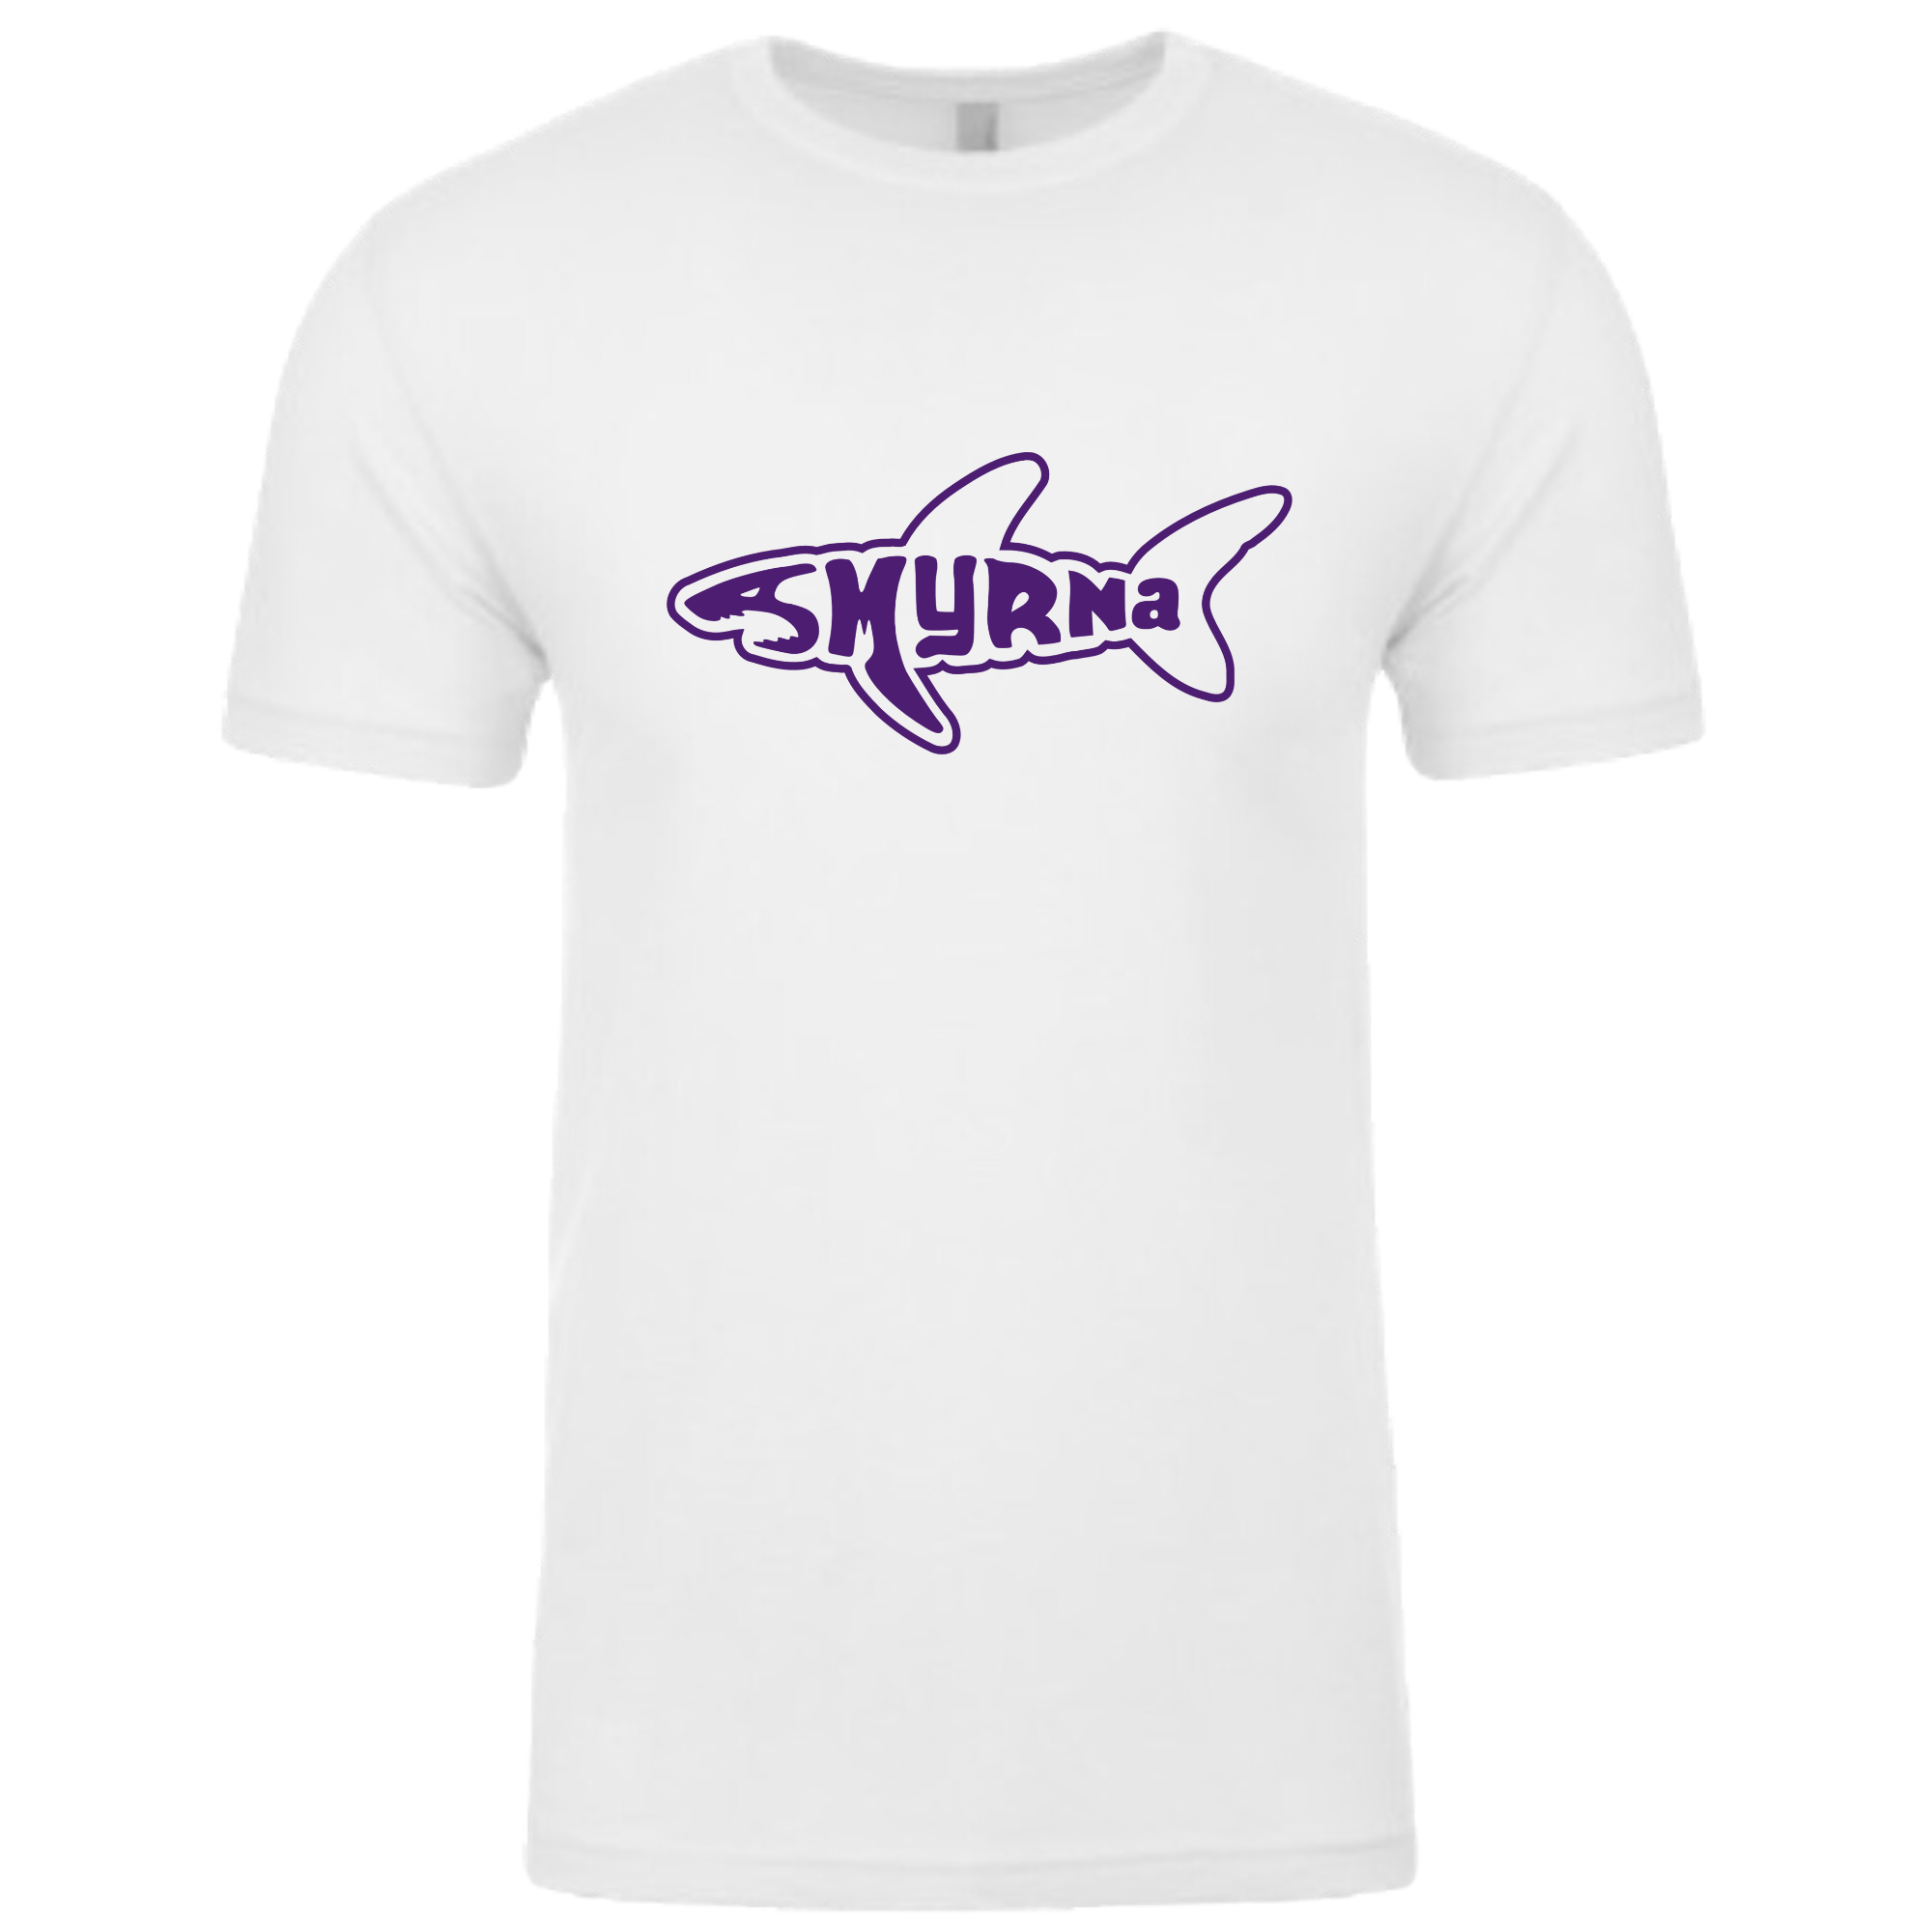 Short Sleeve T-Shirt (Customized) - Smyrna Sharks